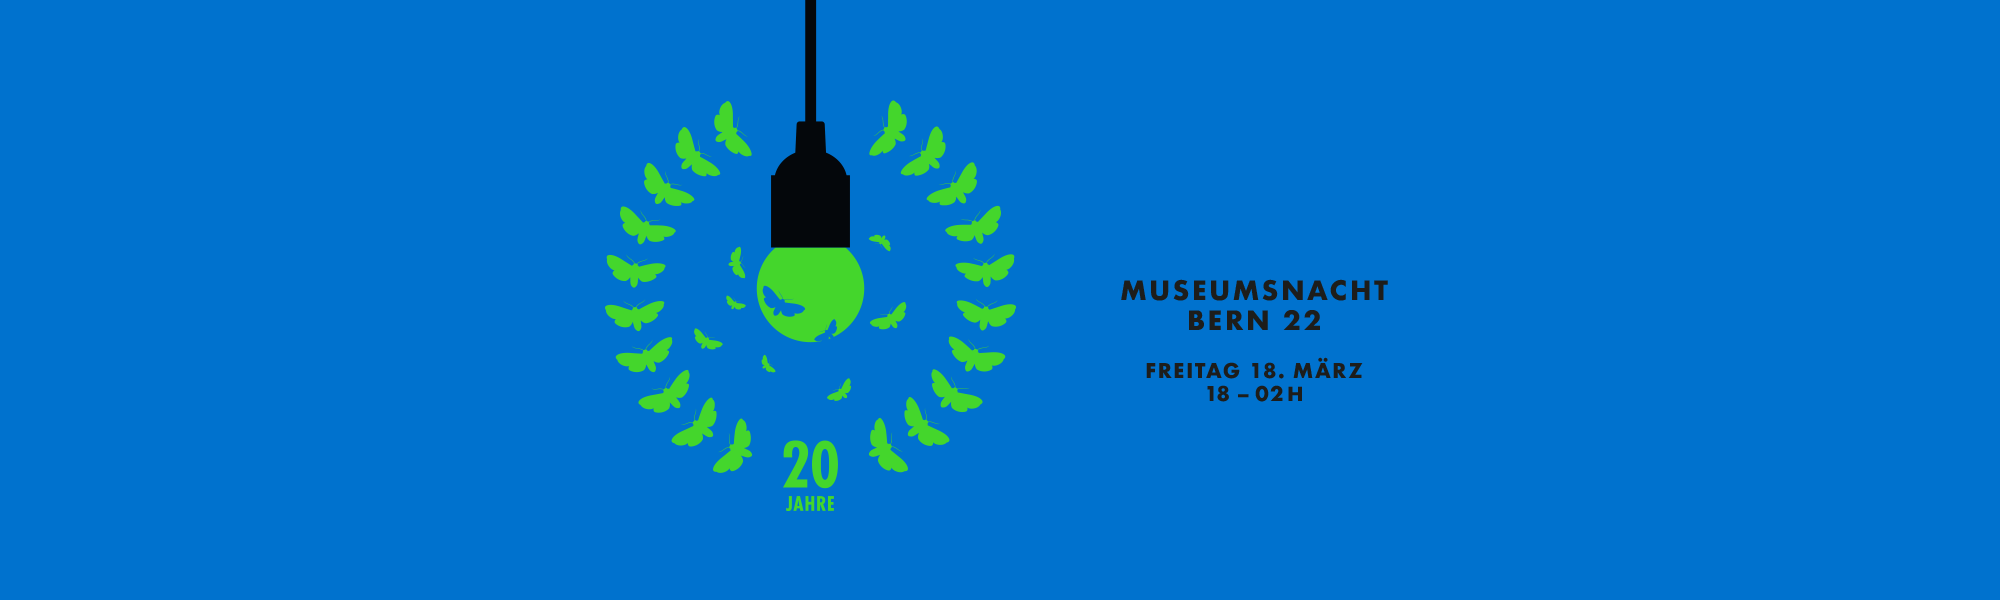 Museumsnacht Bern 2022